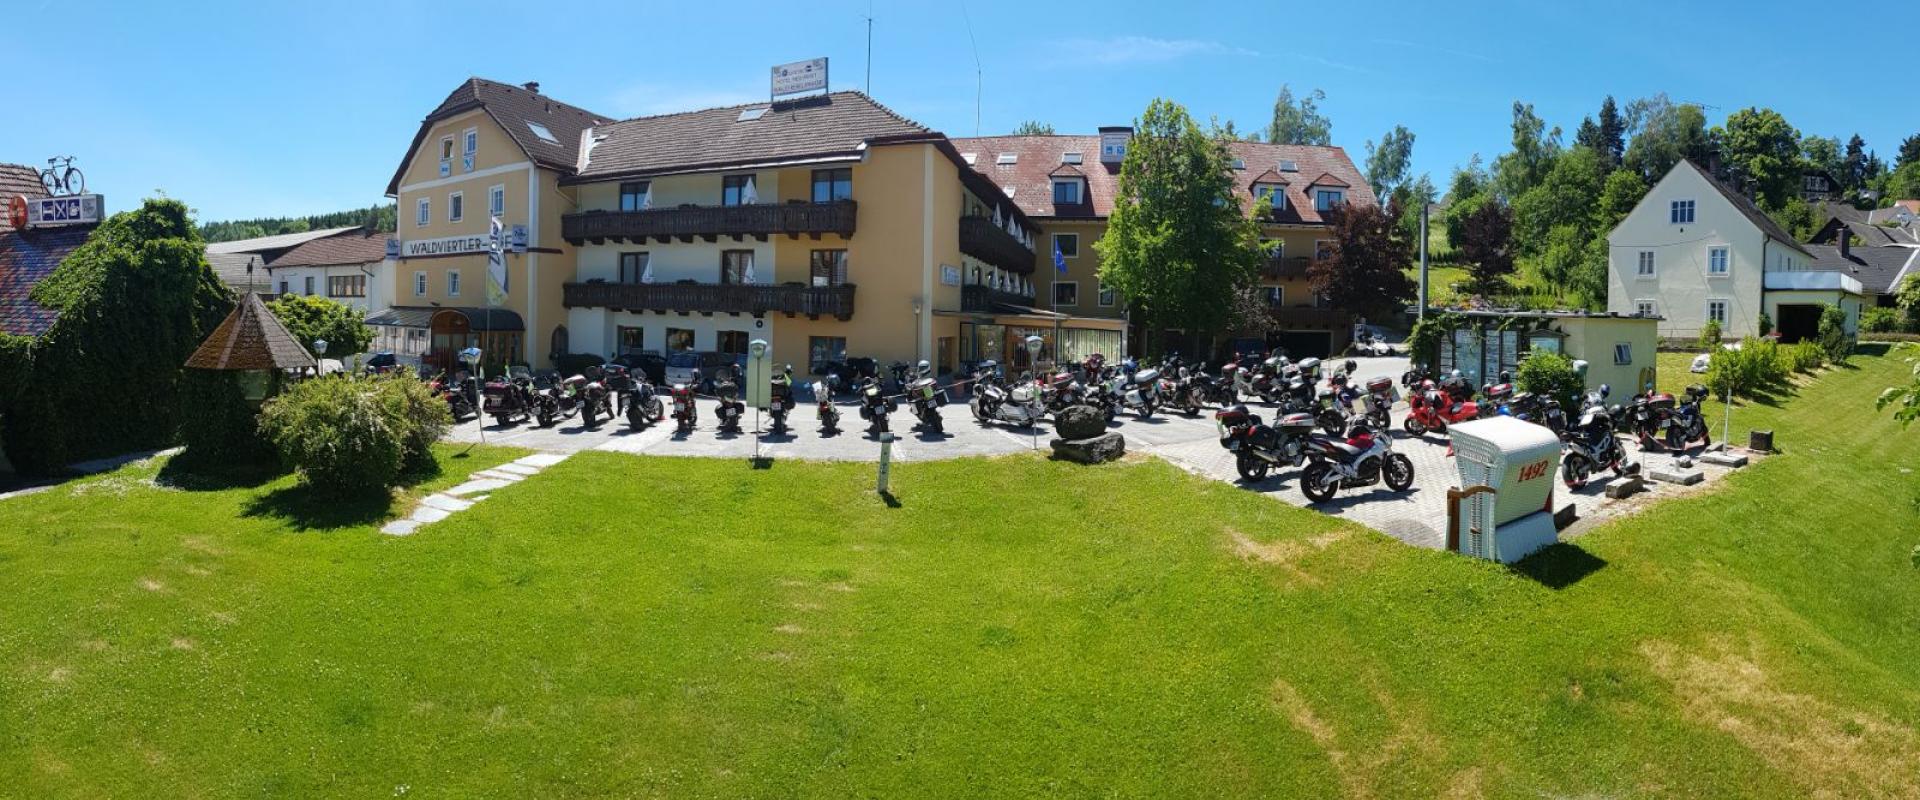 13809 Motorrad Hotel Waldviertler-Hof in Niederösterreich.jpg